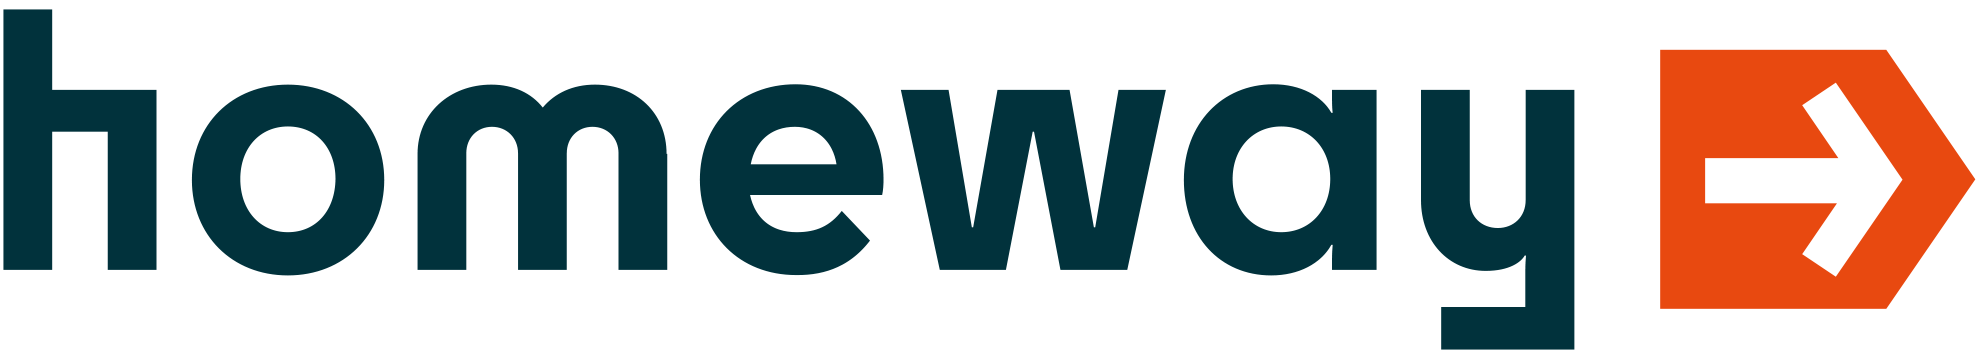 Homeway logo